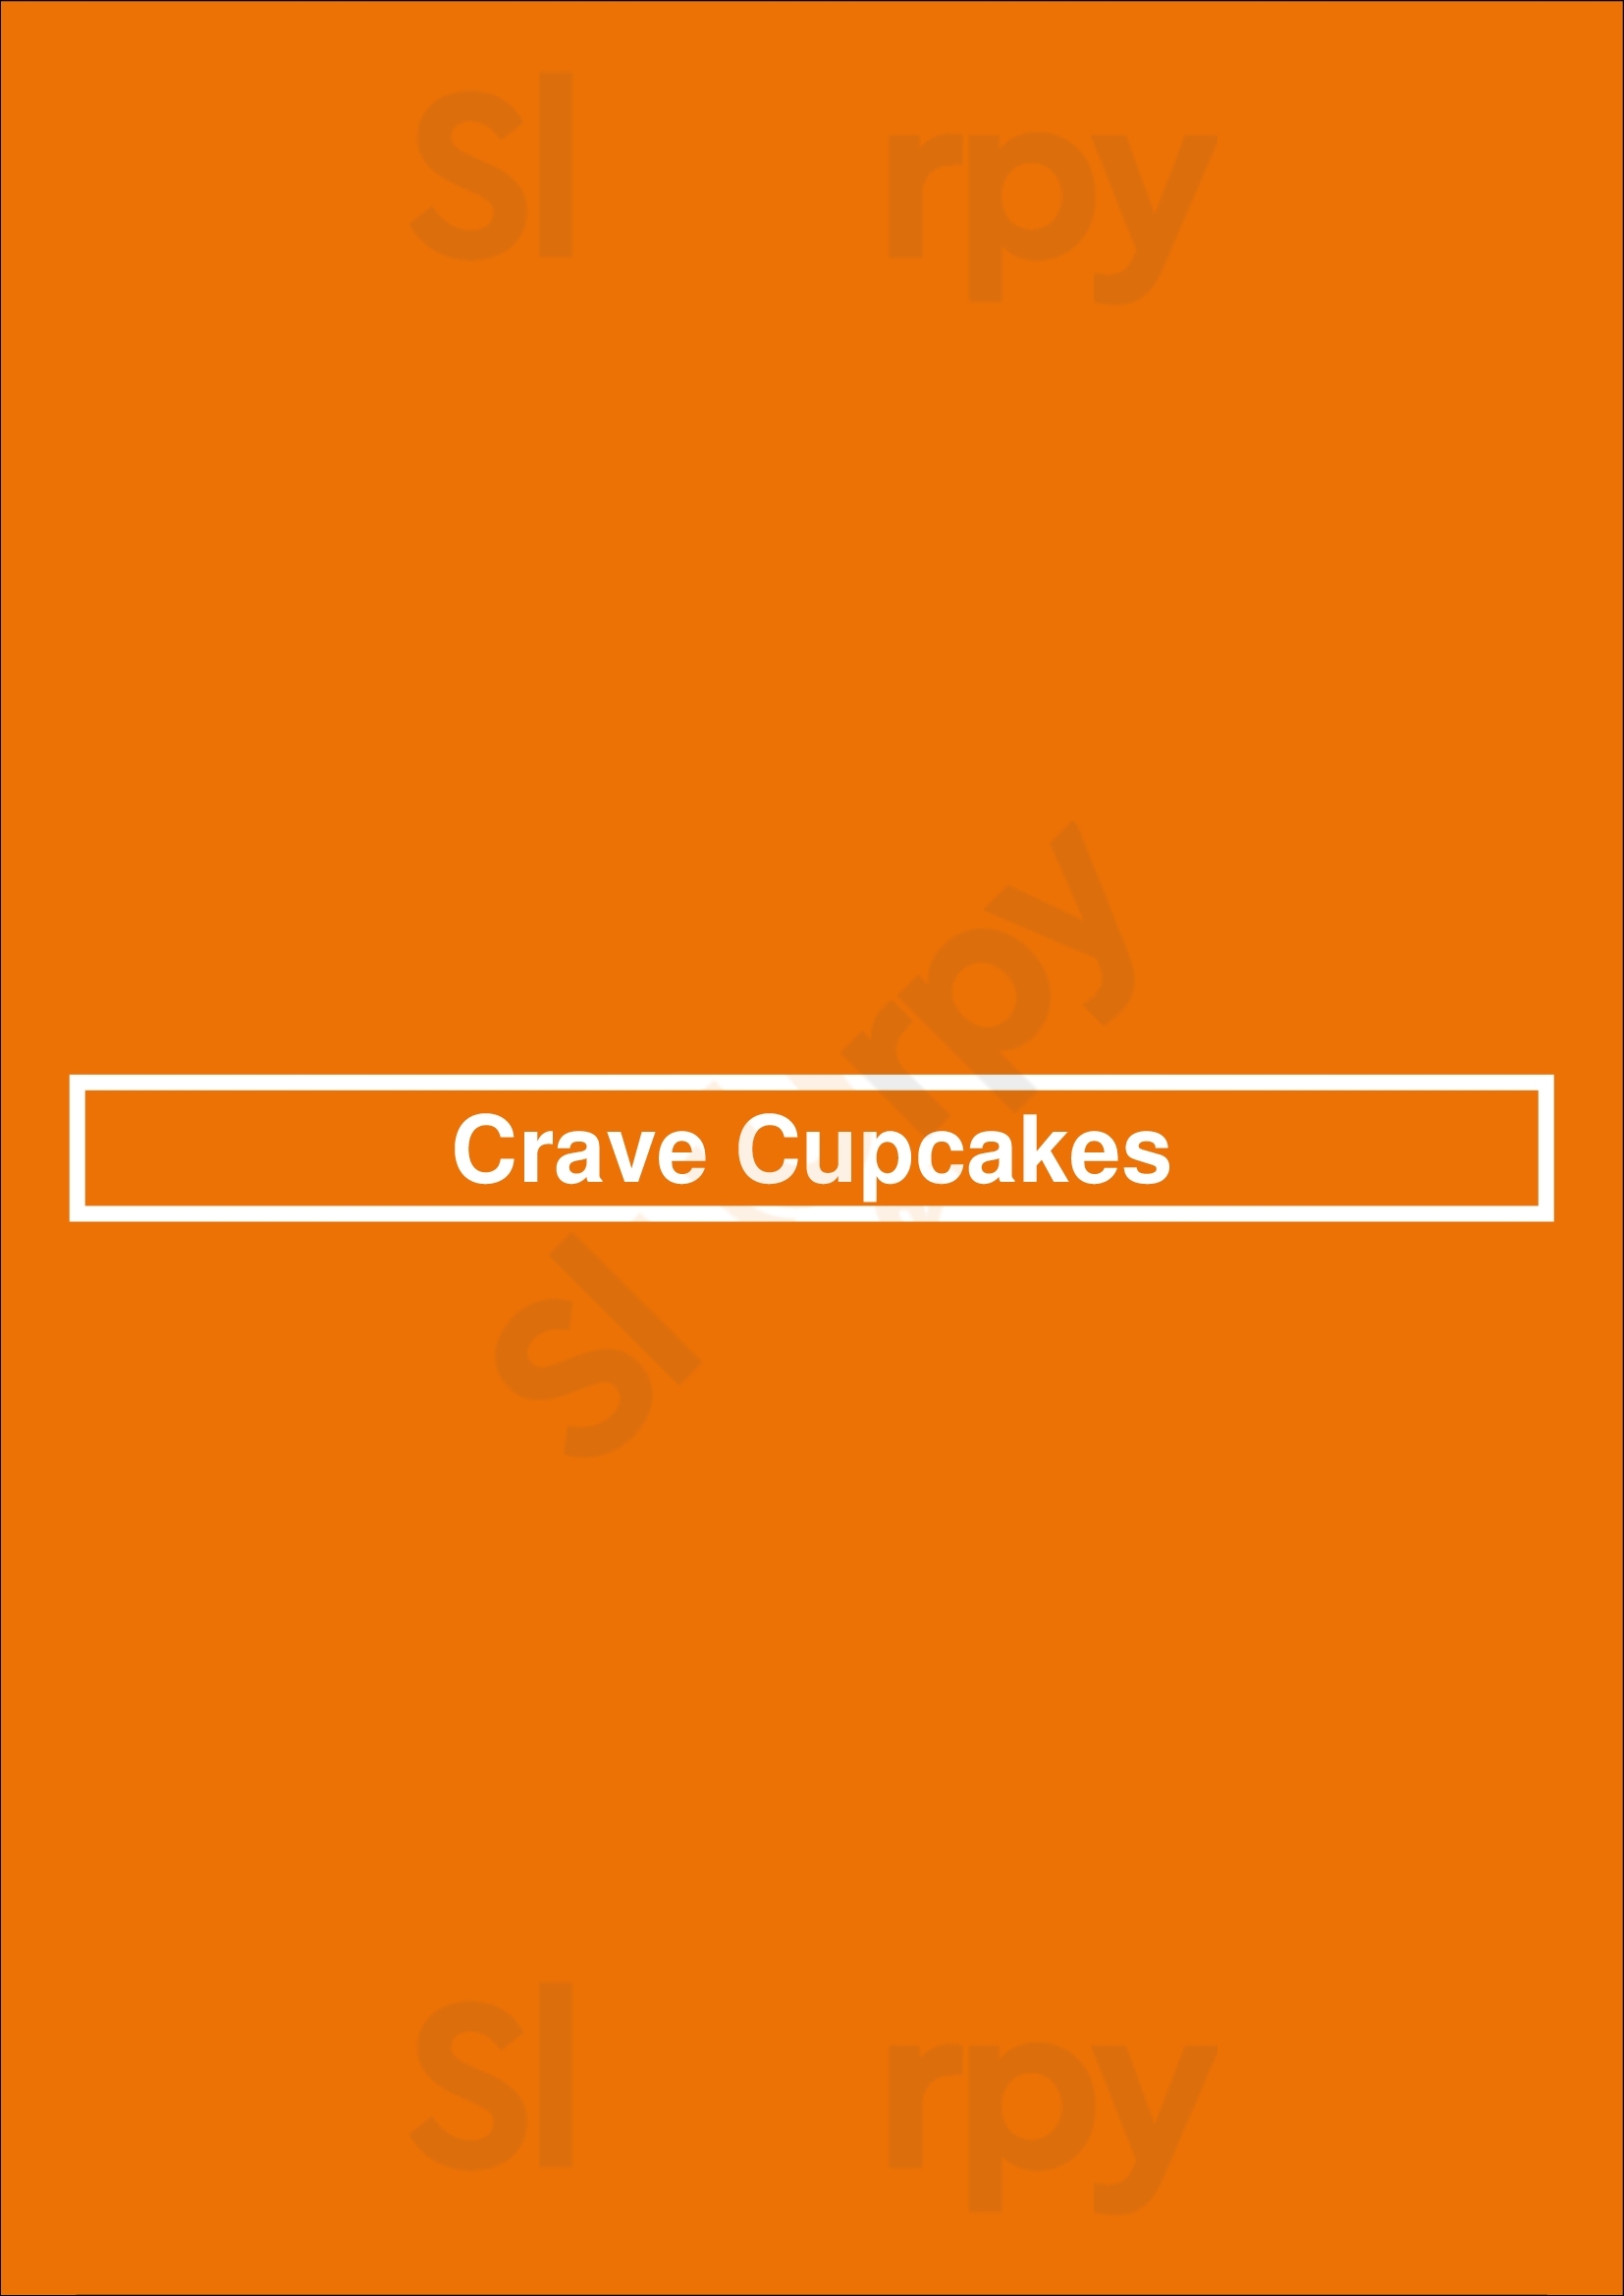 Crave Cupcakes Houston Menu - 1